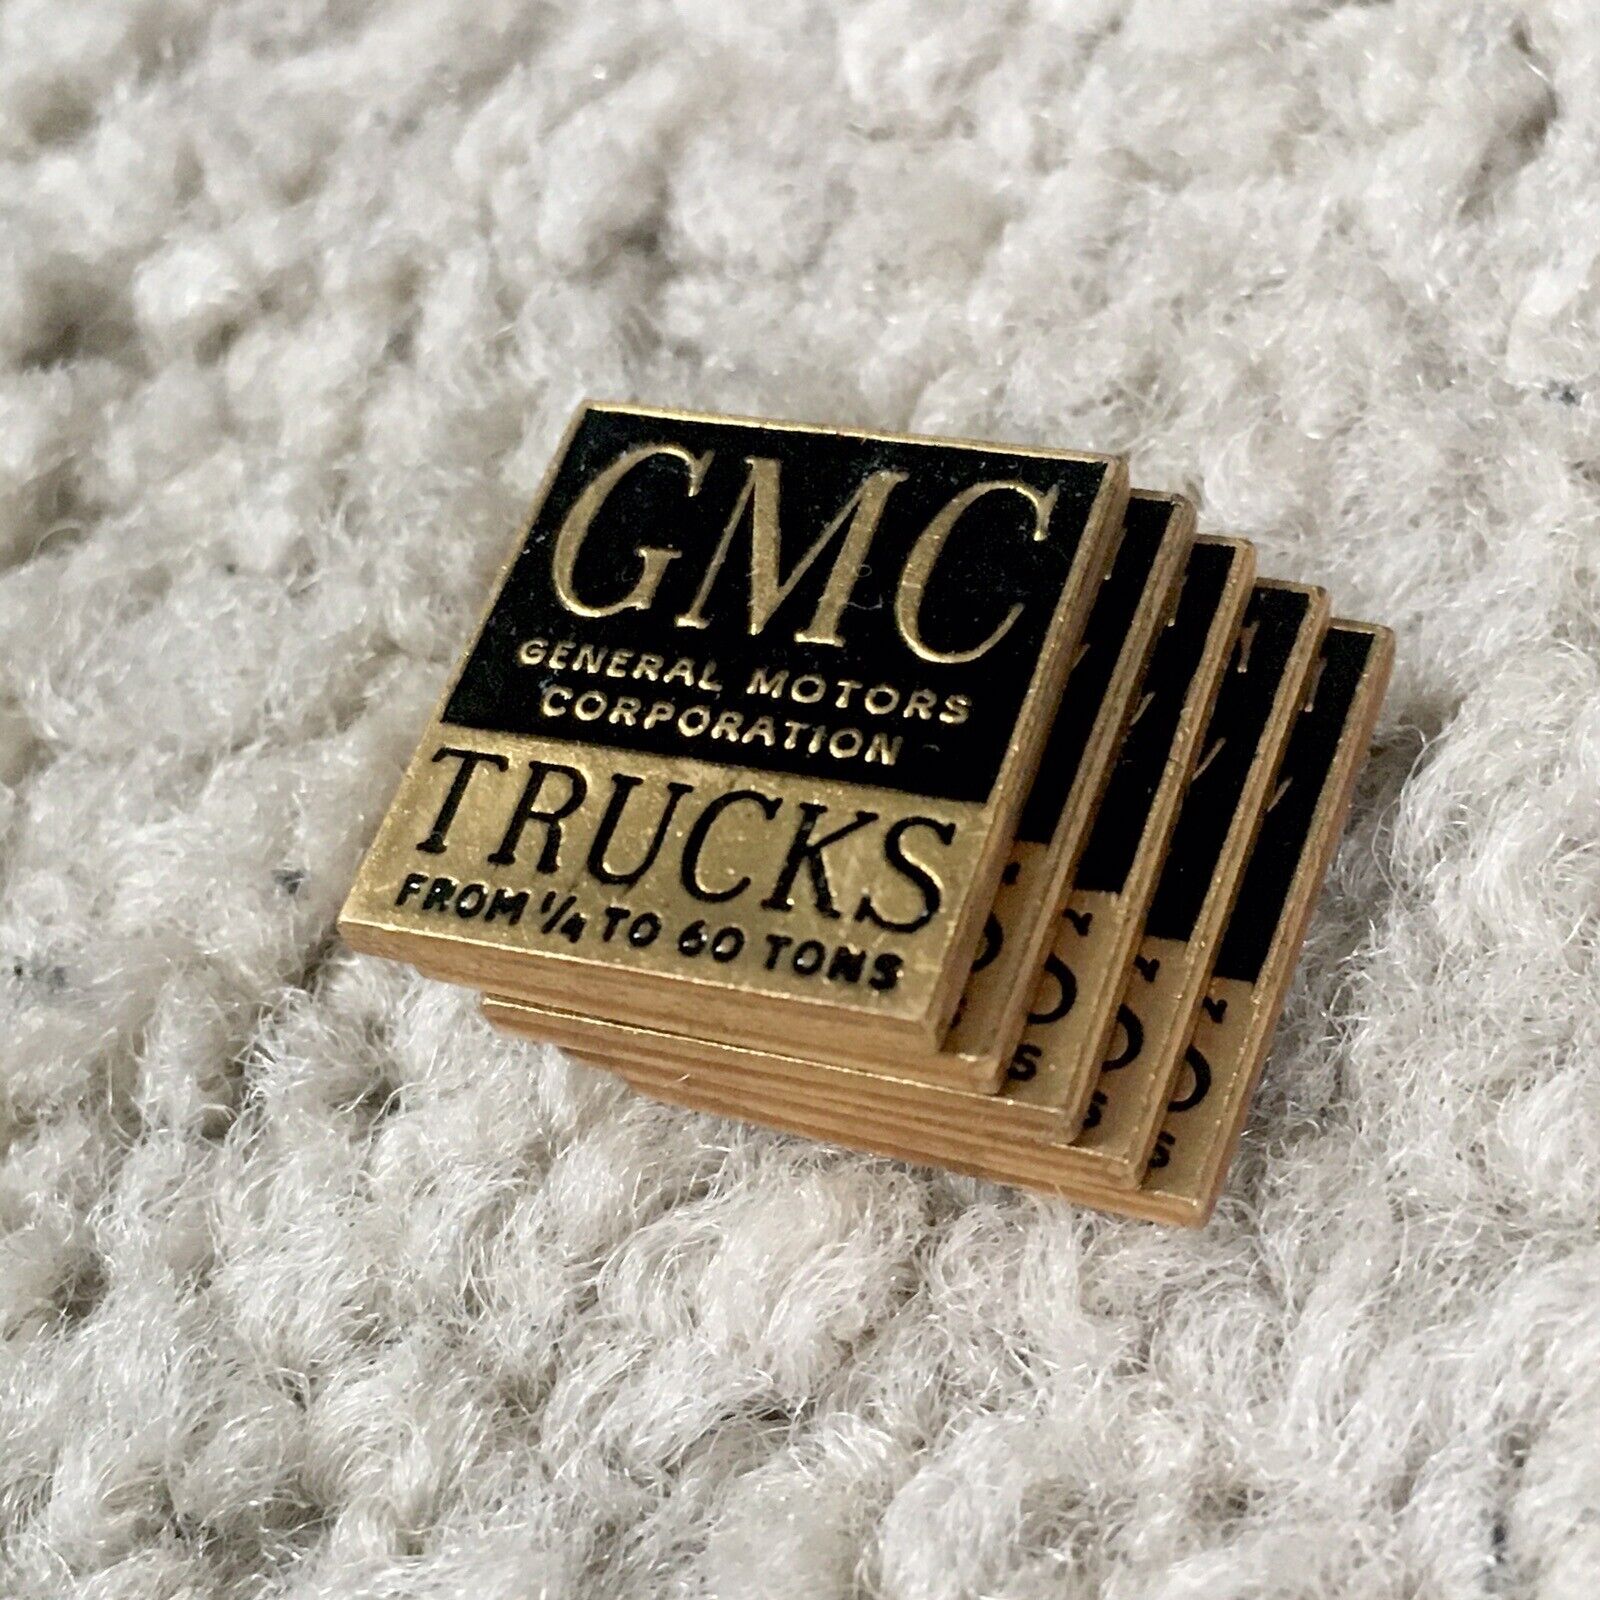 Lot of 5 Vintage GMC TRUCKS Keychain Emblems NOS - General Motors Corporation